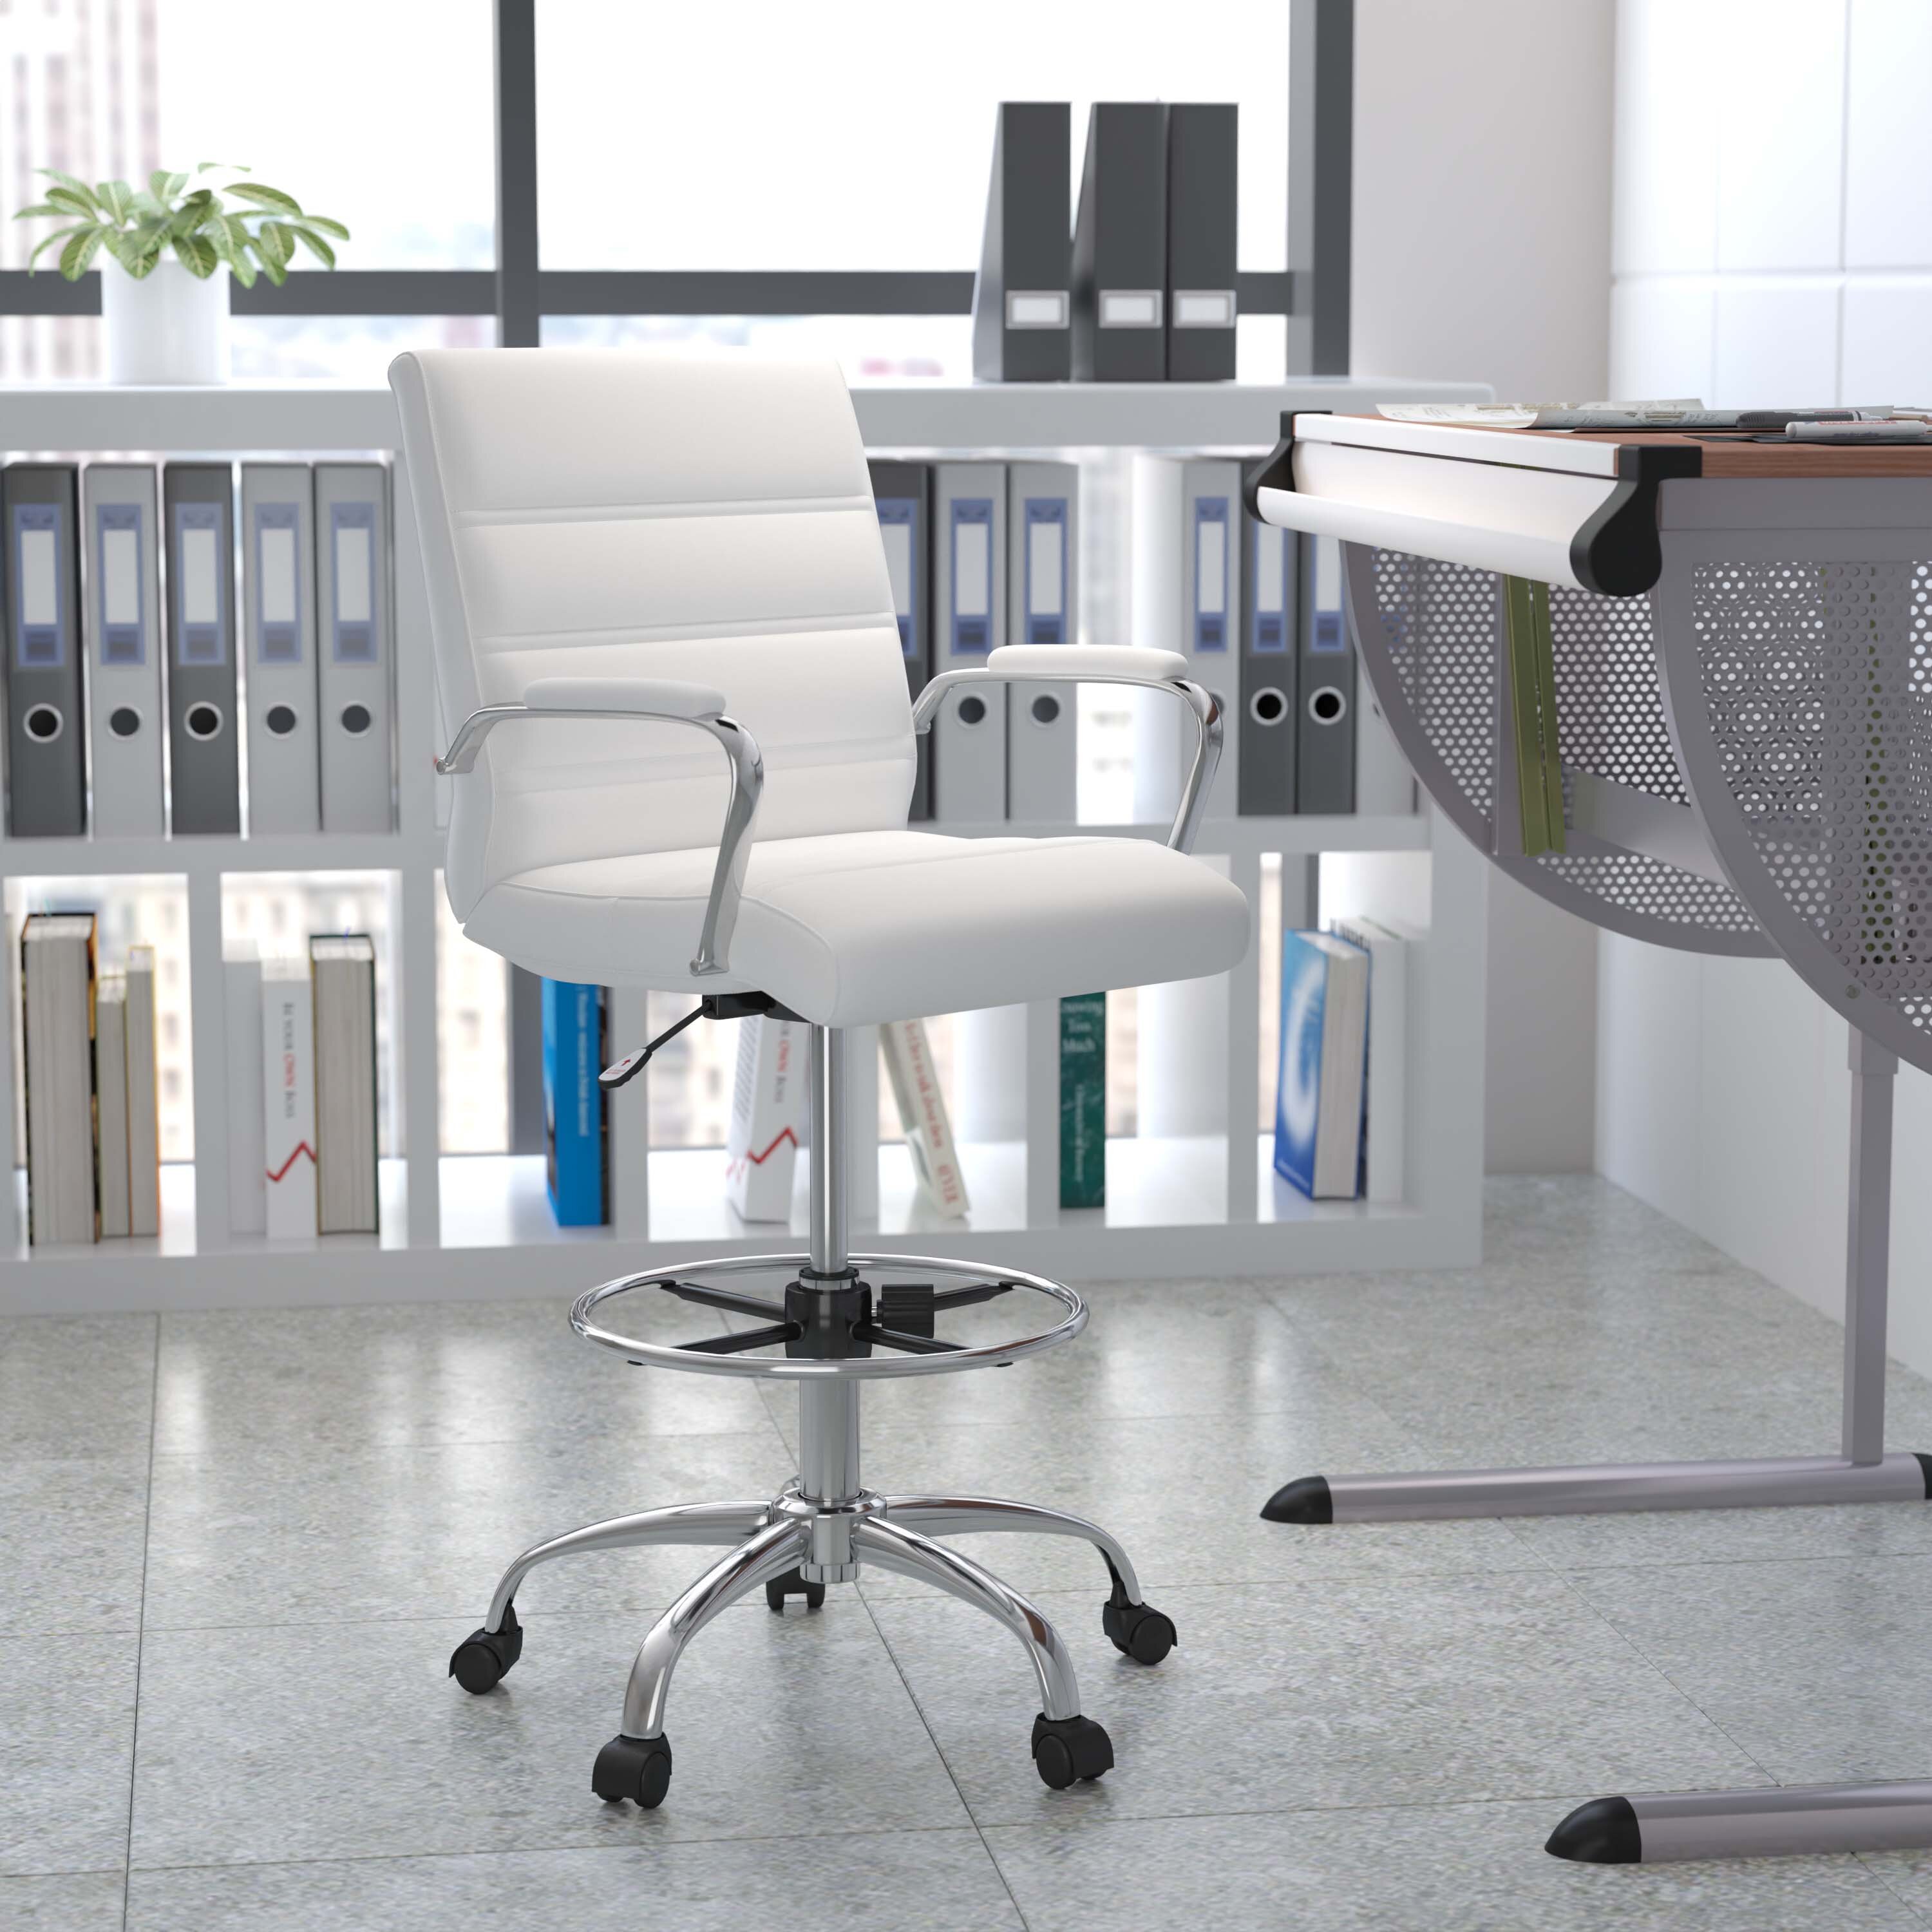 35 SOFT Office Chair Caster Wheels High Quality Heavy Duty NEW!!! Hard Floor